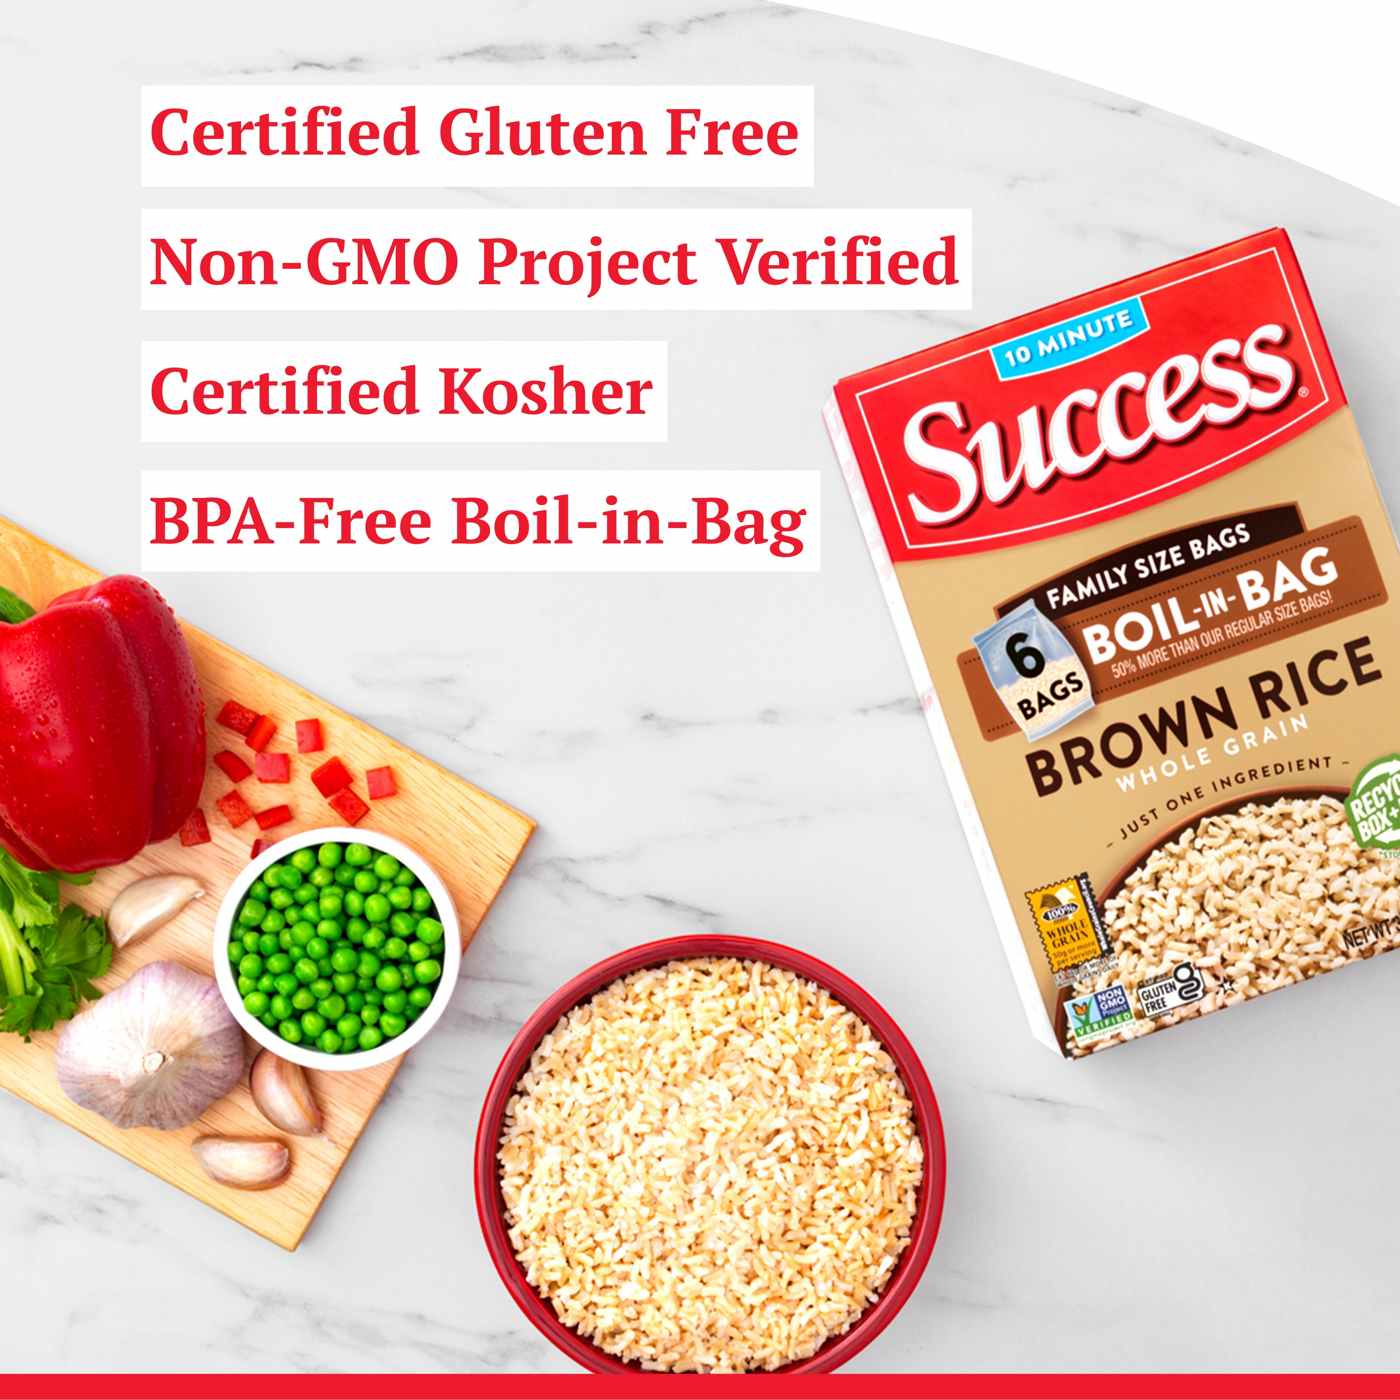 Success Boil-in-Bag Whole Grain Brown Rice; image 2 of 7